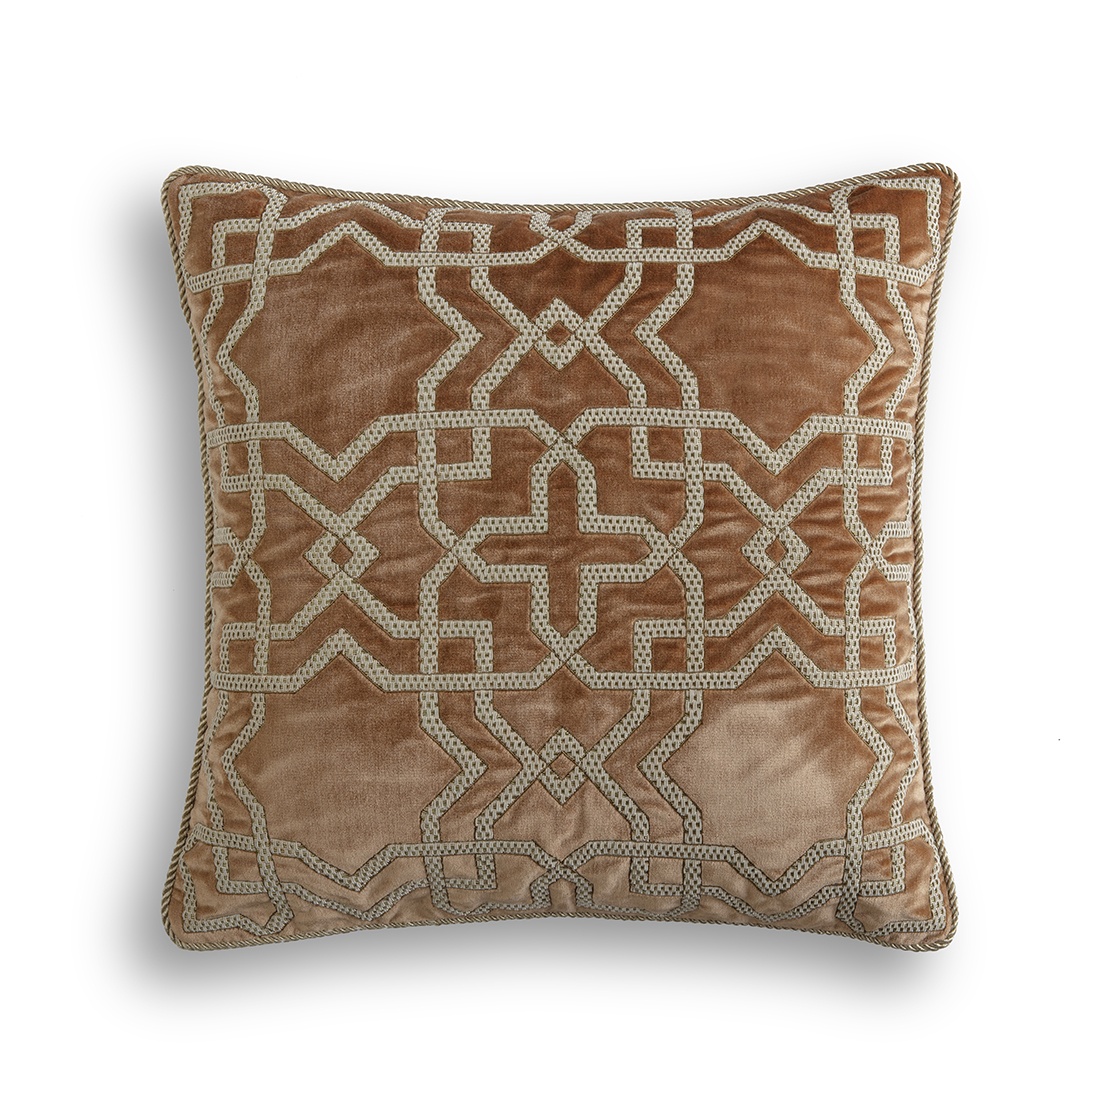 Habibi cushion in Capri silk velvet - Copper - Beaumont & Fletcher